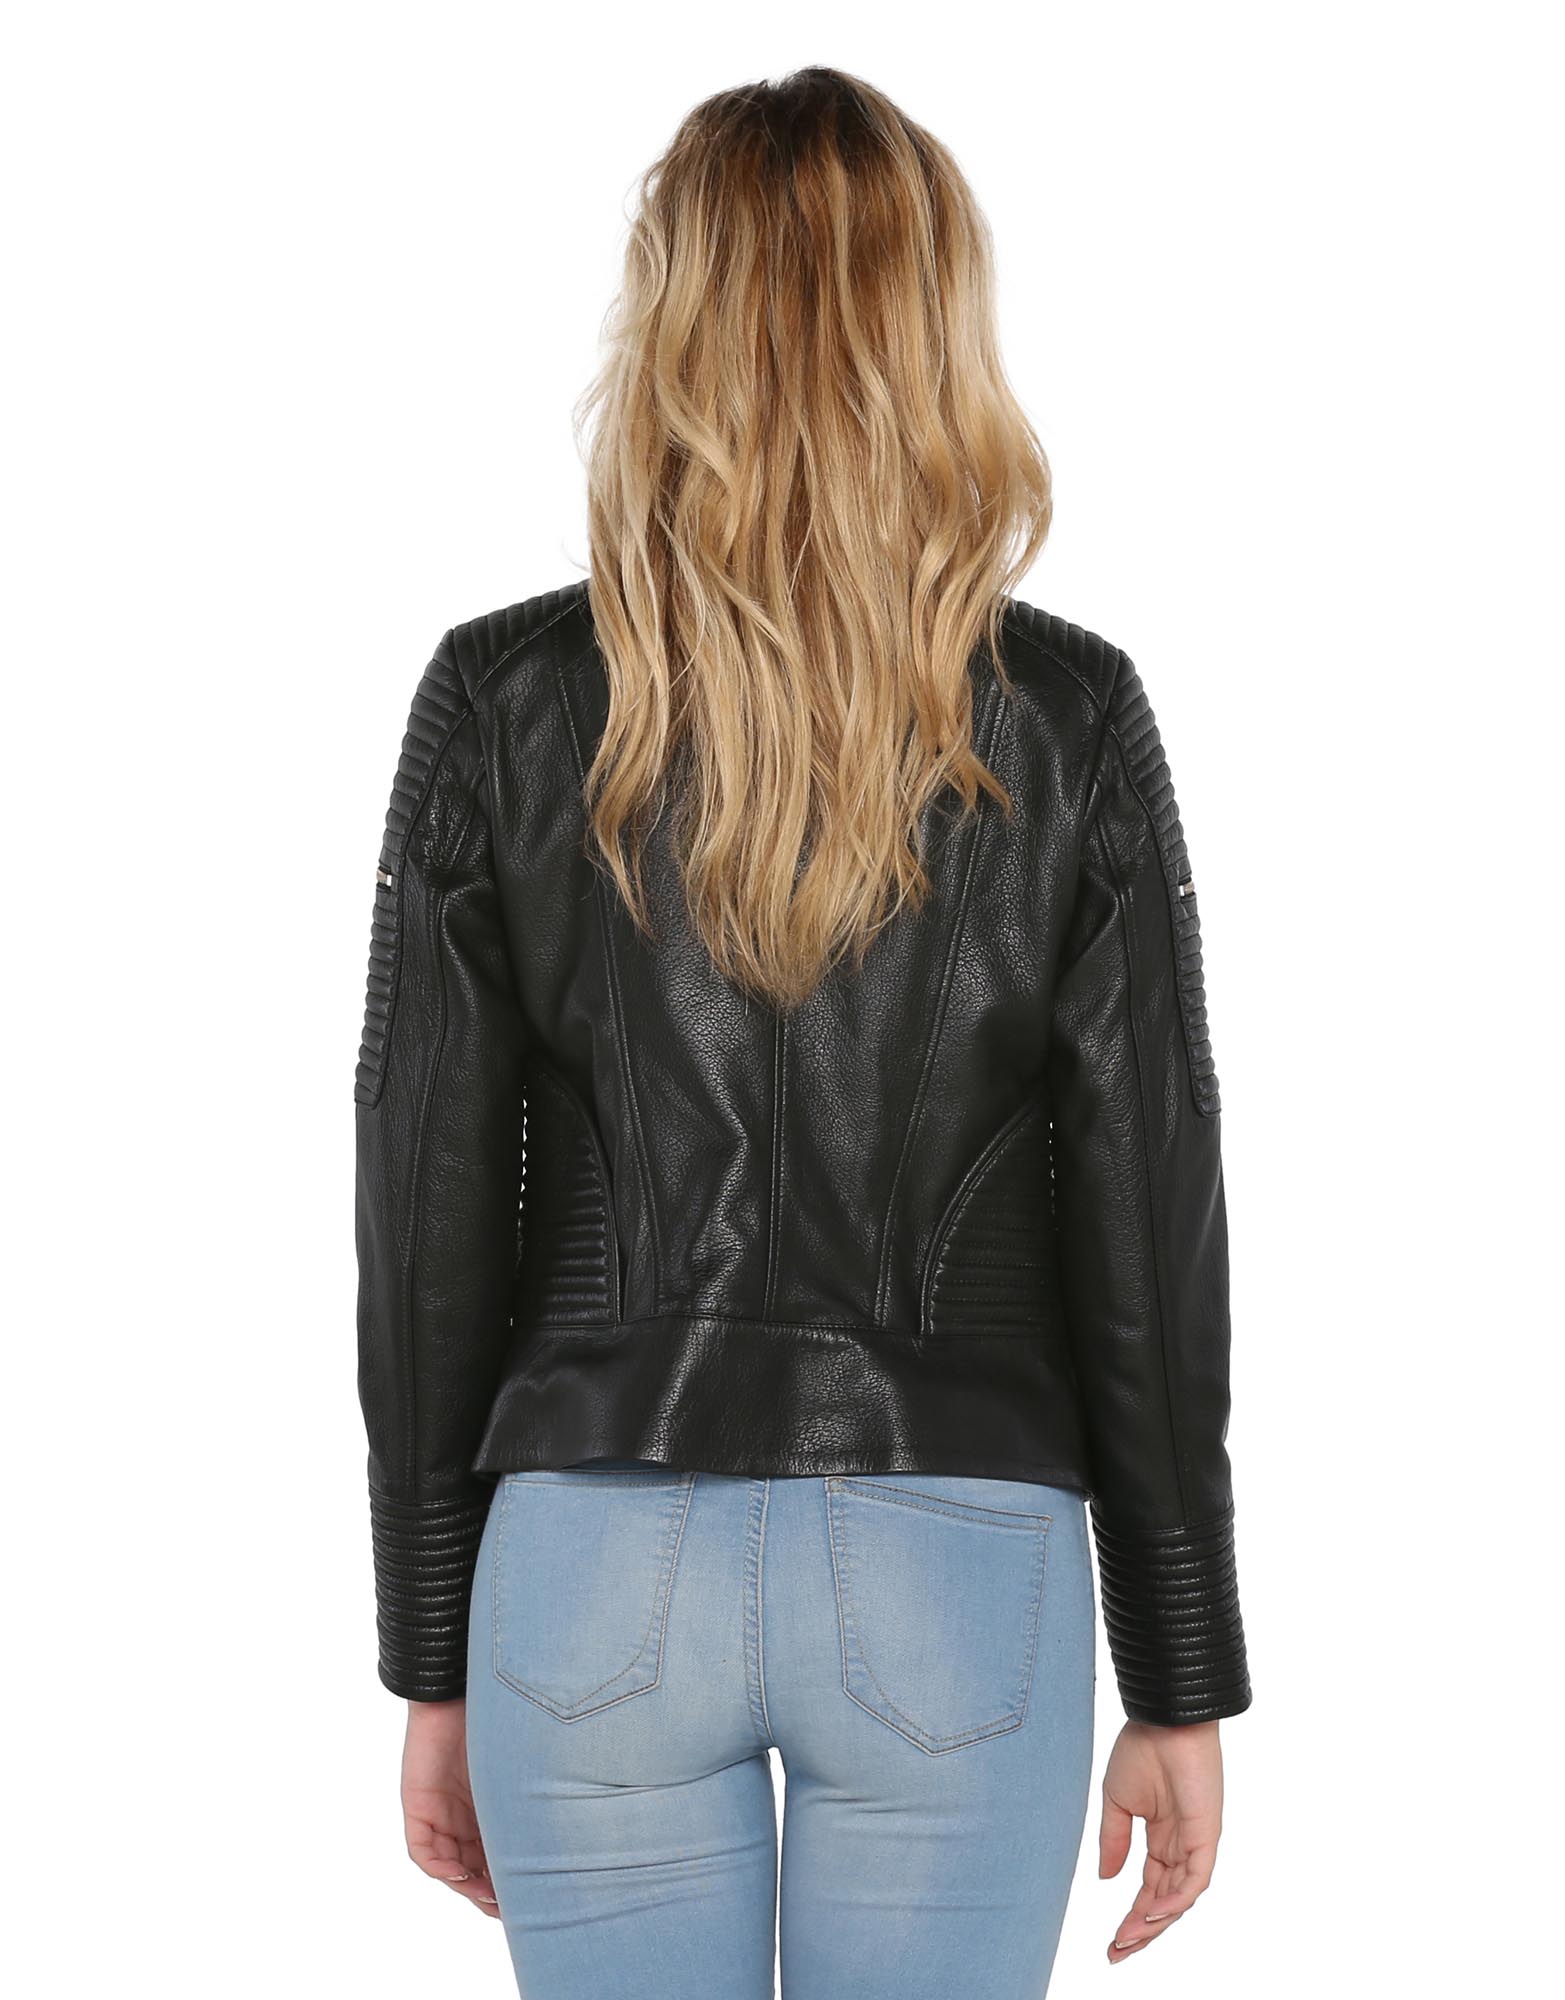 Women's Bomber Black Real Leather Jacket